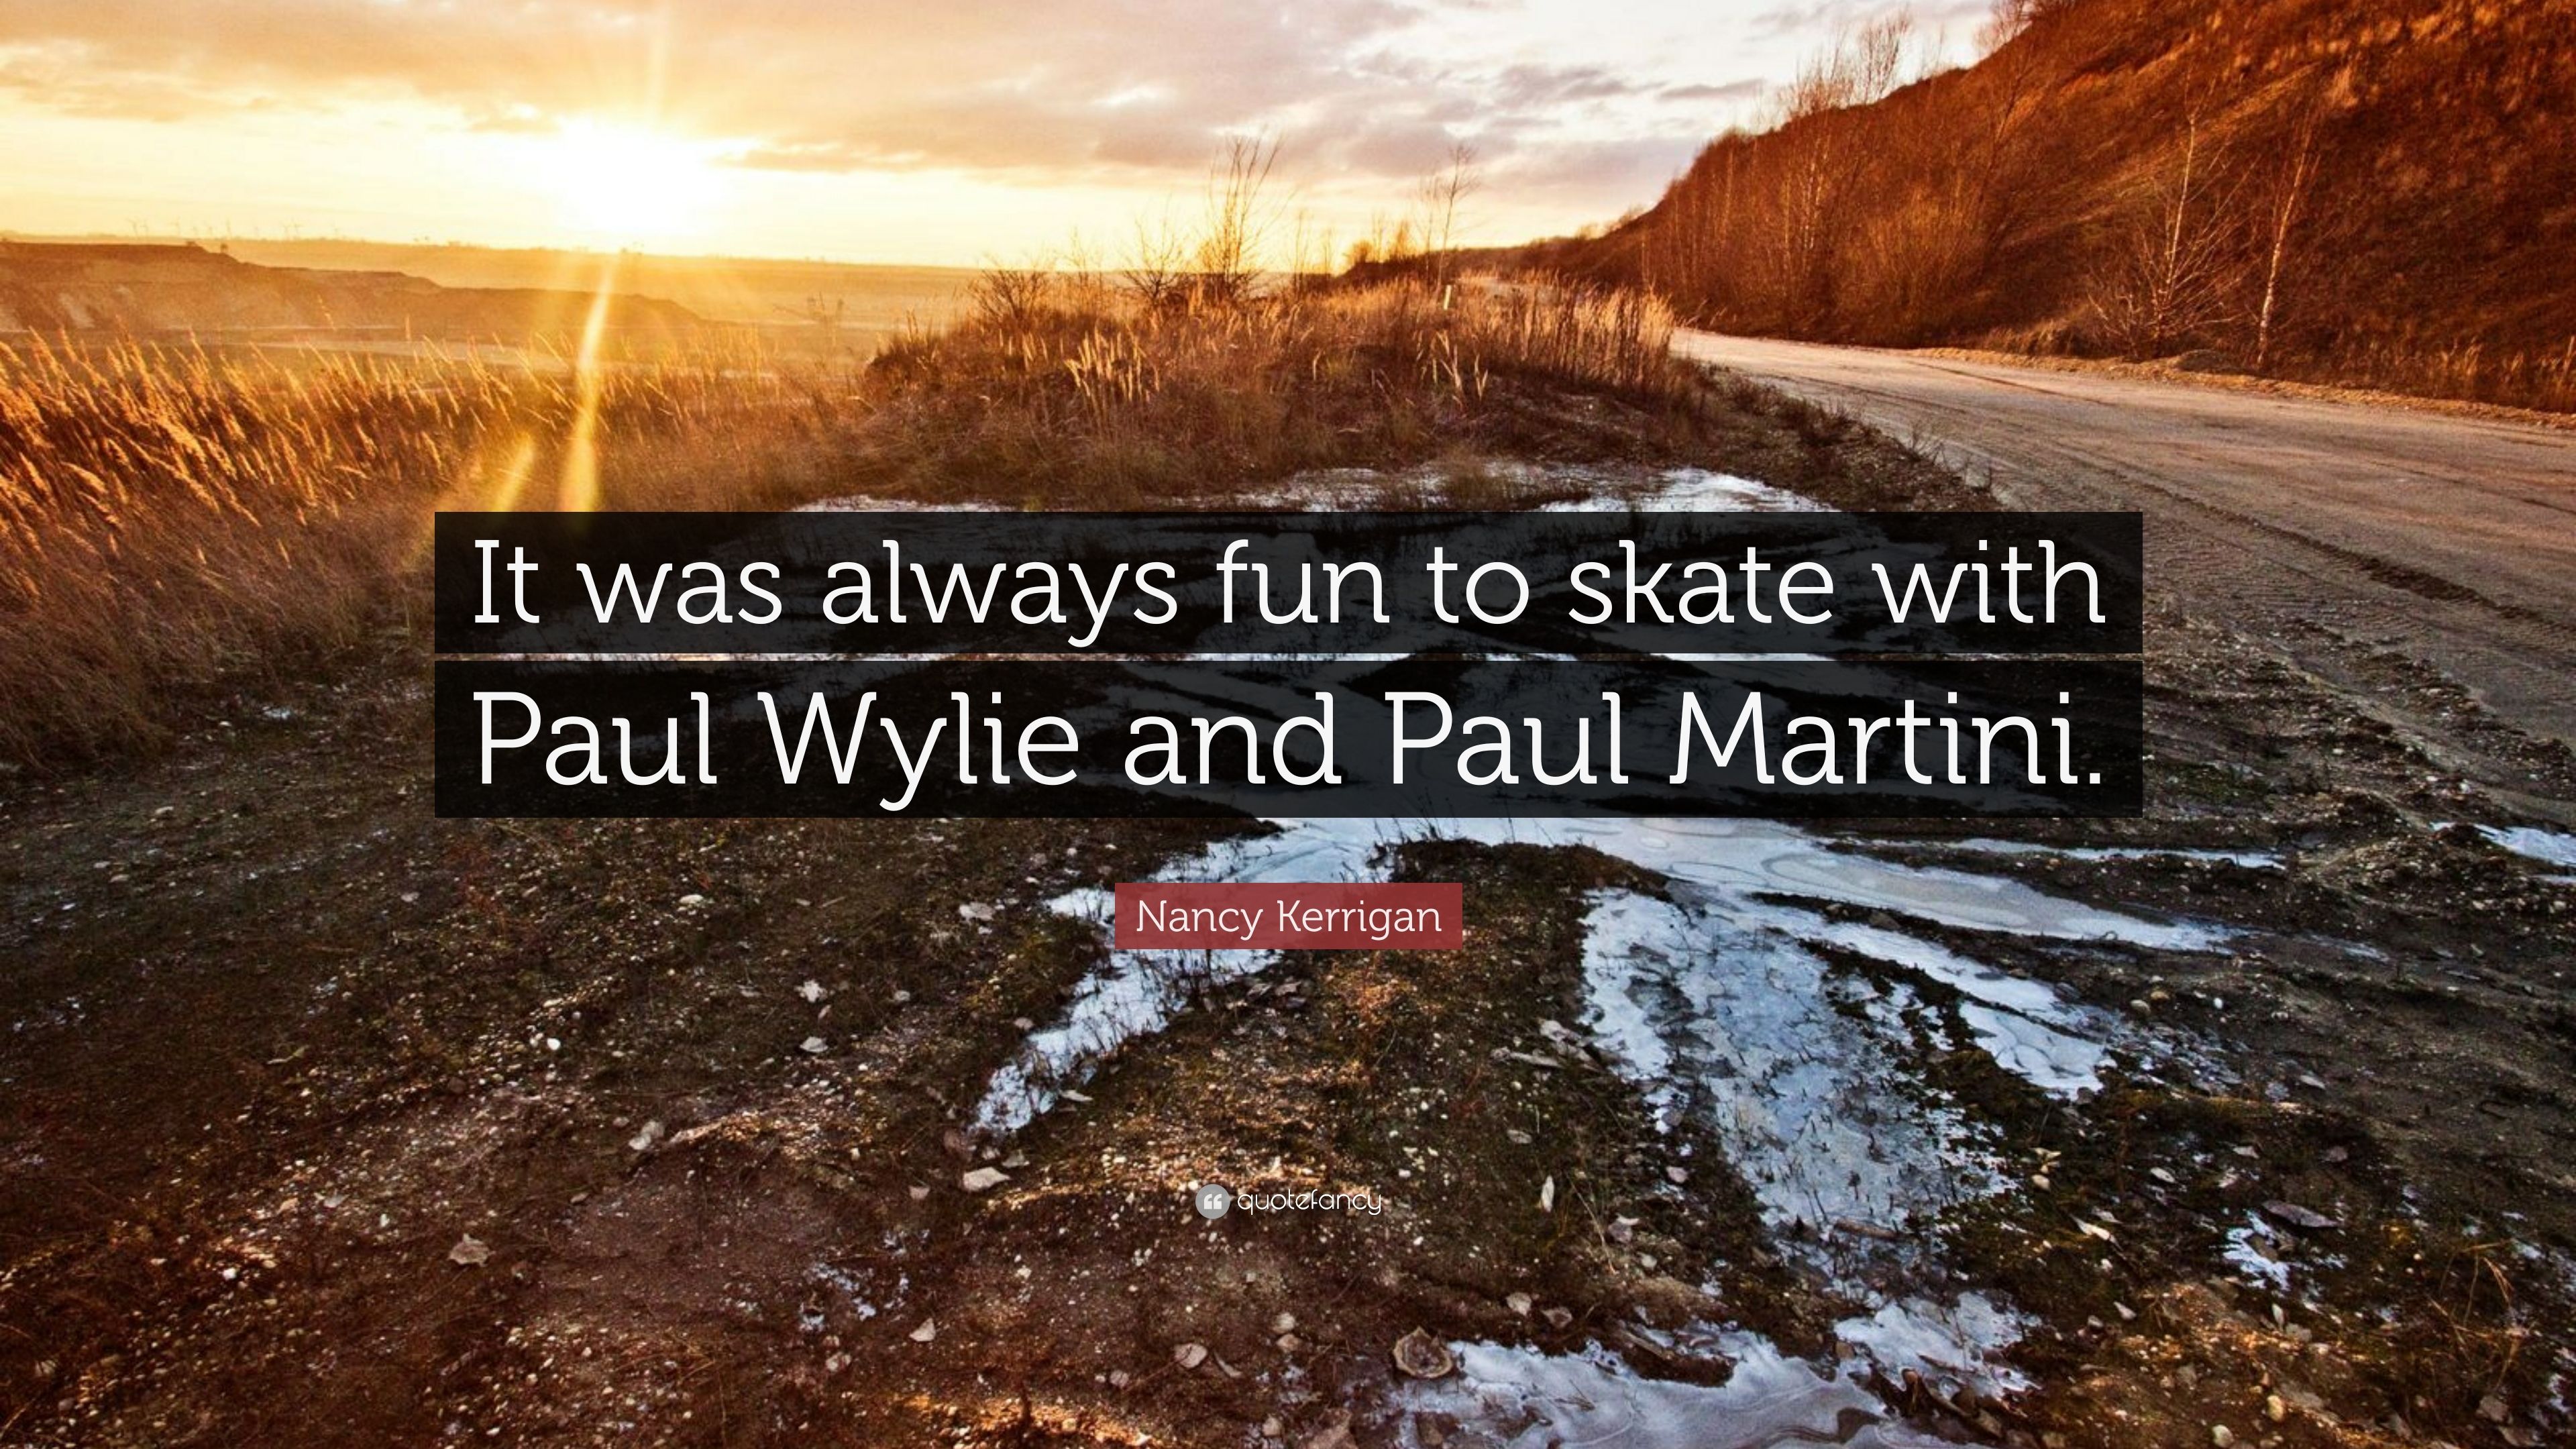 Nancy Kerrigan Quote: “It was always fun to skate with Paul Wylie